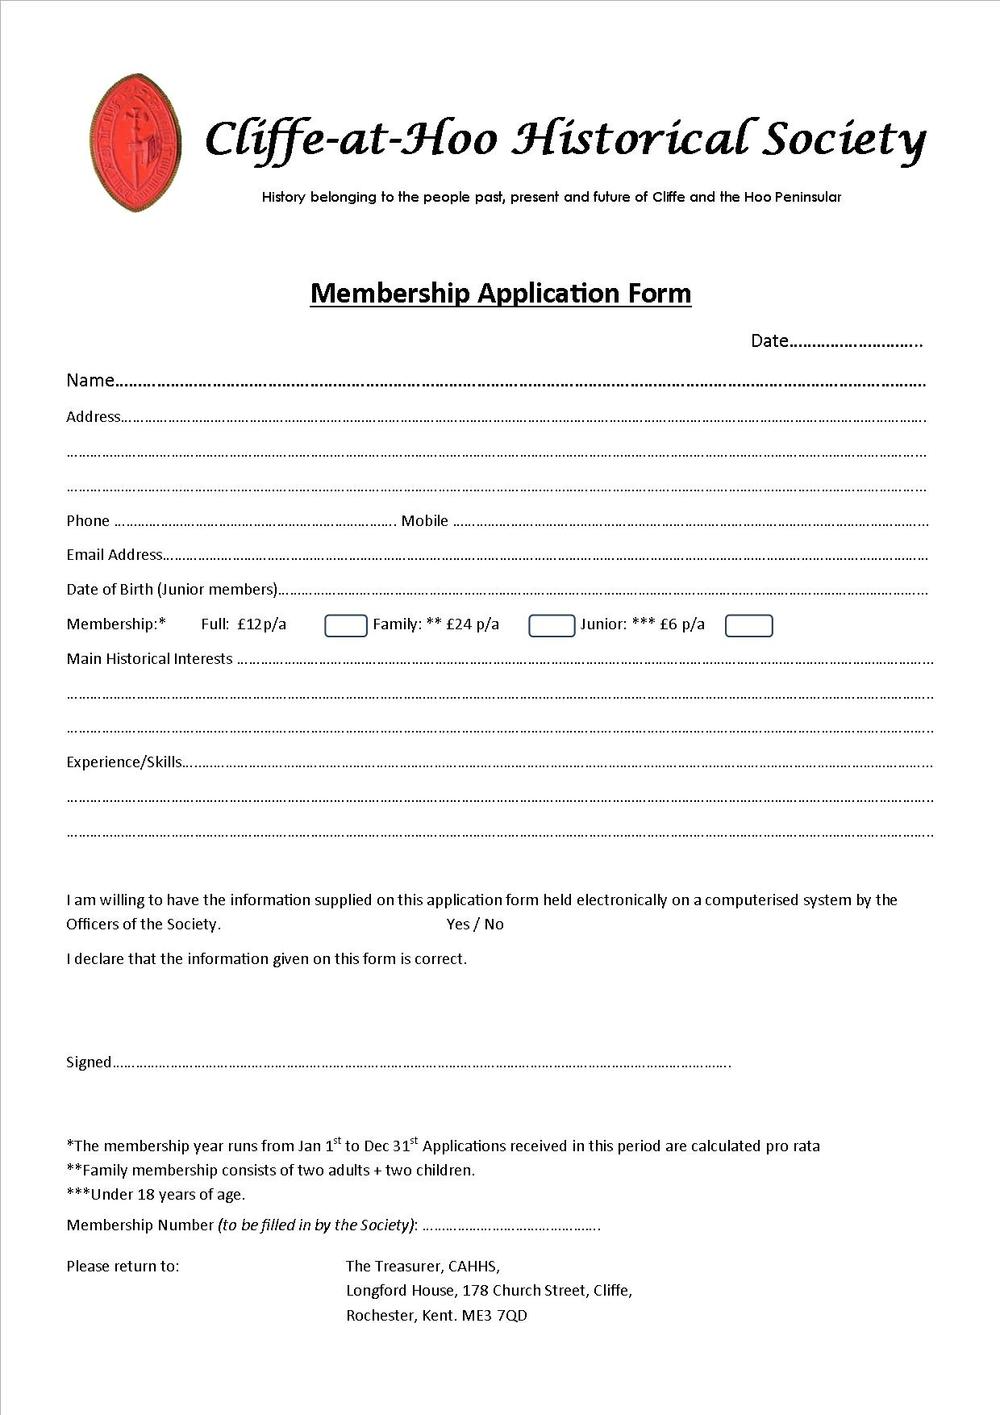 Membership Application Form.jpg